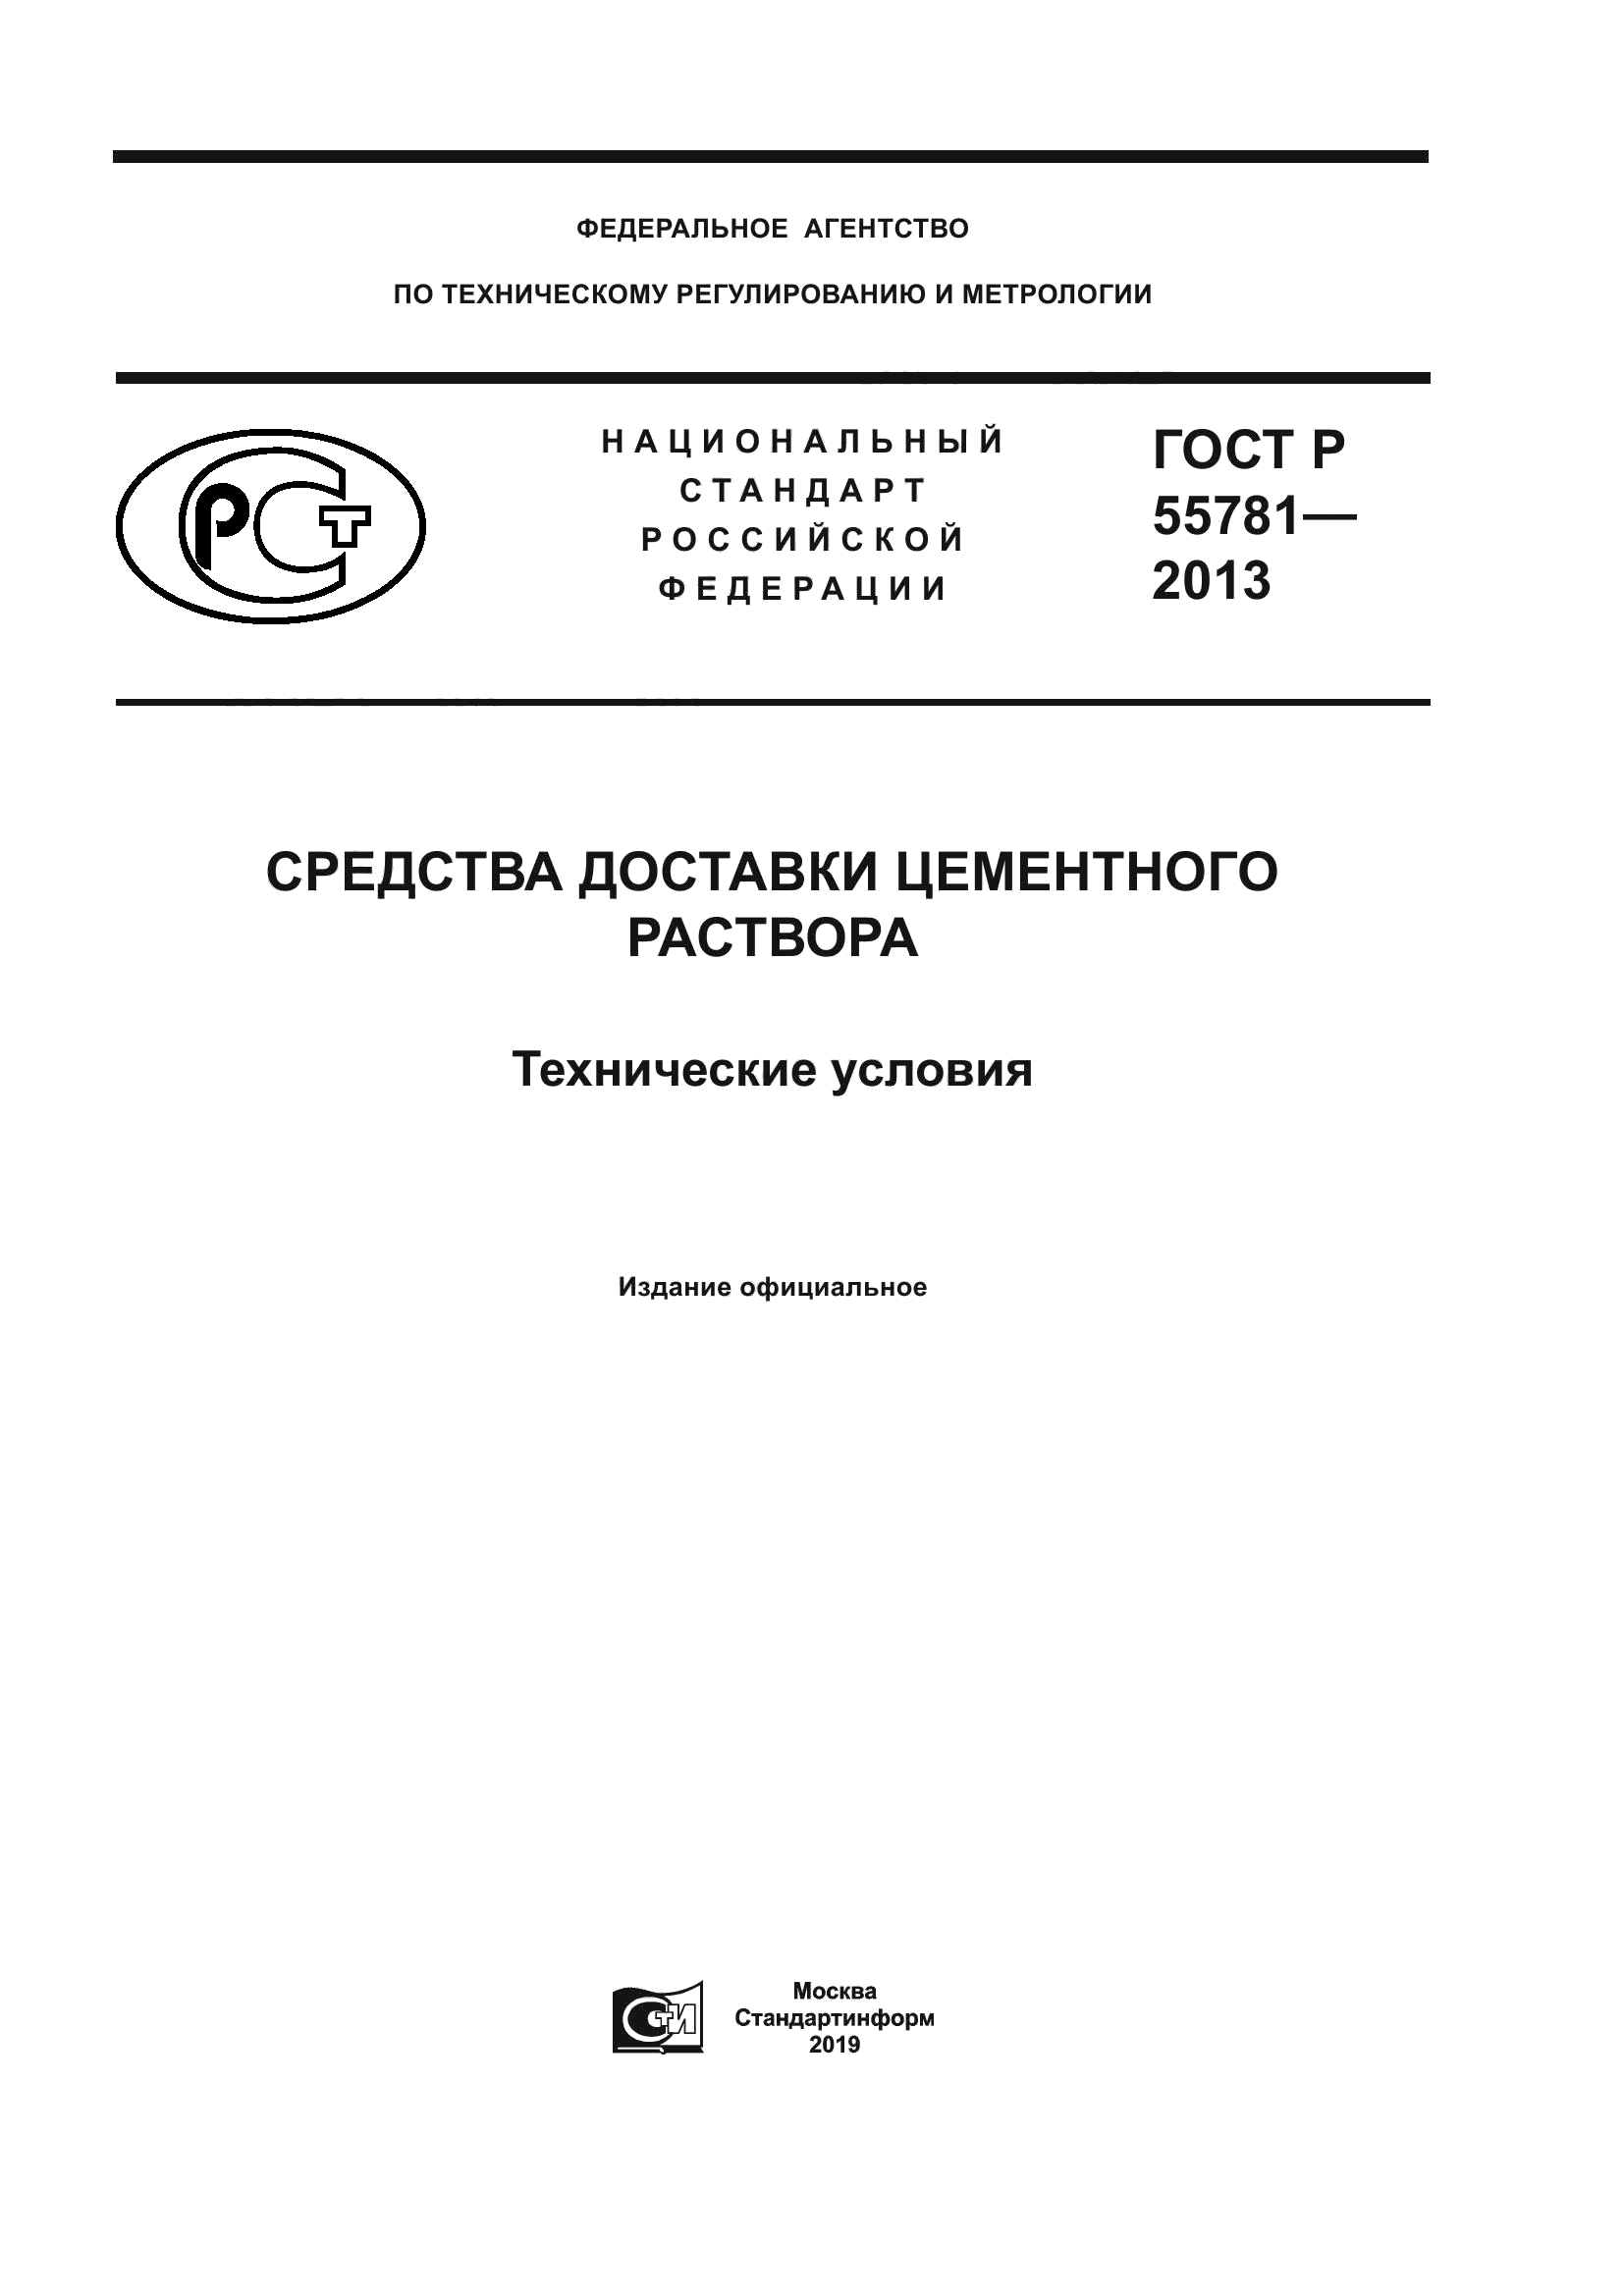 ГОСТ Р 55781-2013